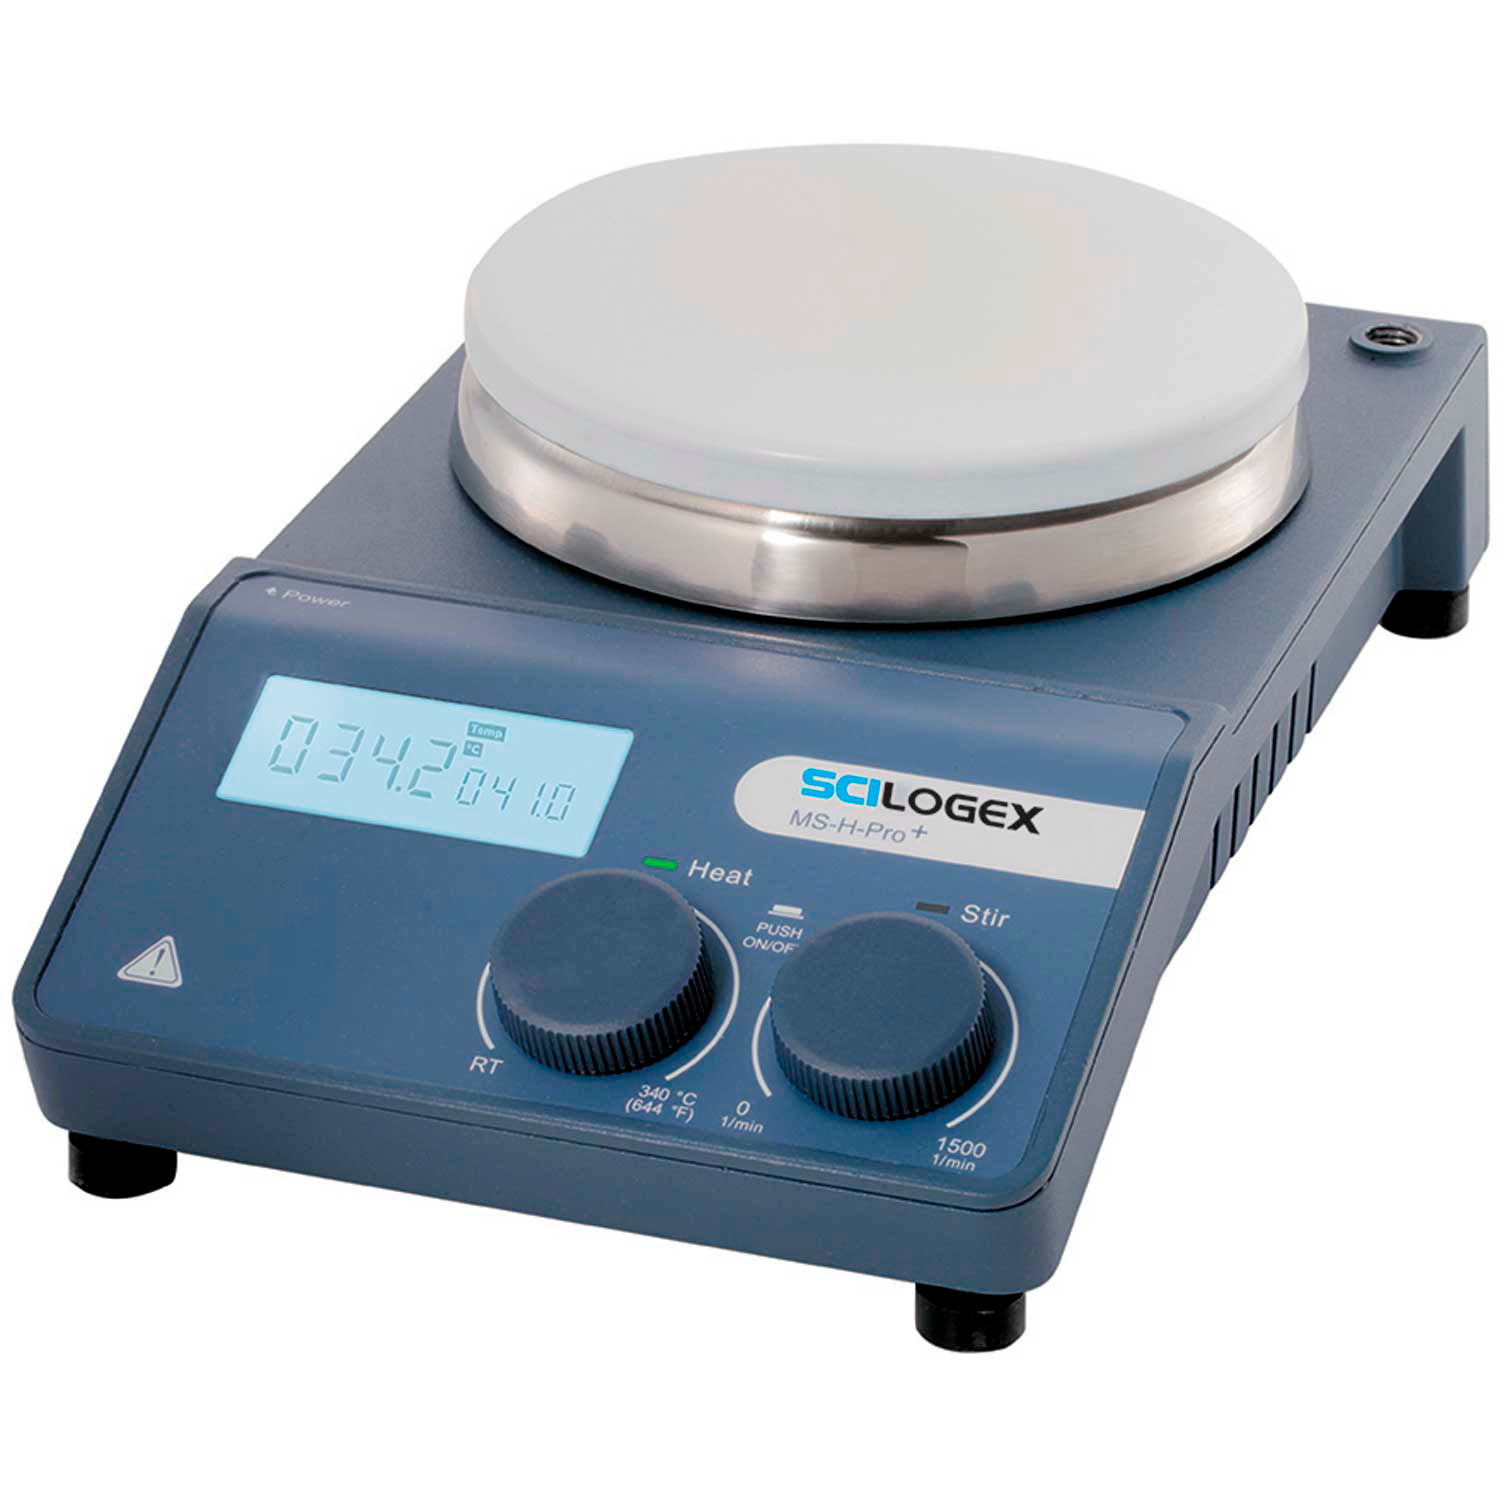 SCILOGEX Scilogex 86143101 Model MS-H280-Pro Led Circular-Top Digital Magnetic Hot Plate Stirrer with 5.3 Diameter Ceramic Coated Plate 110V